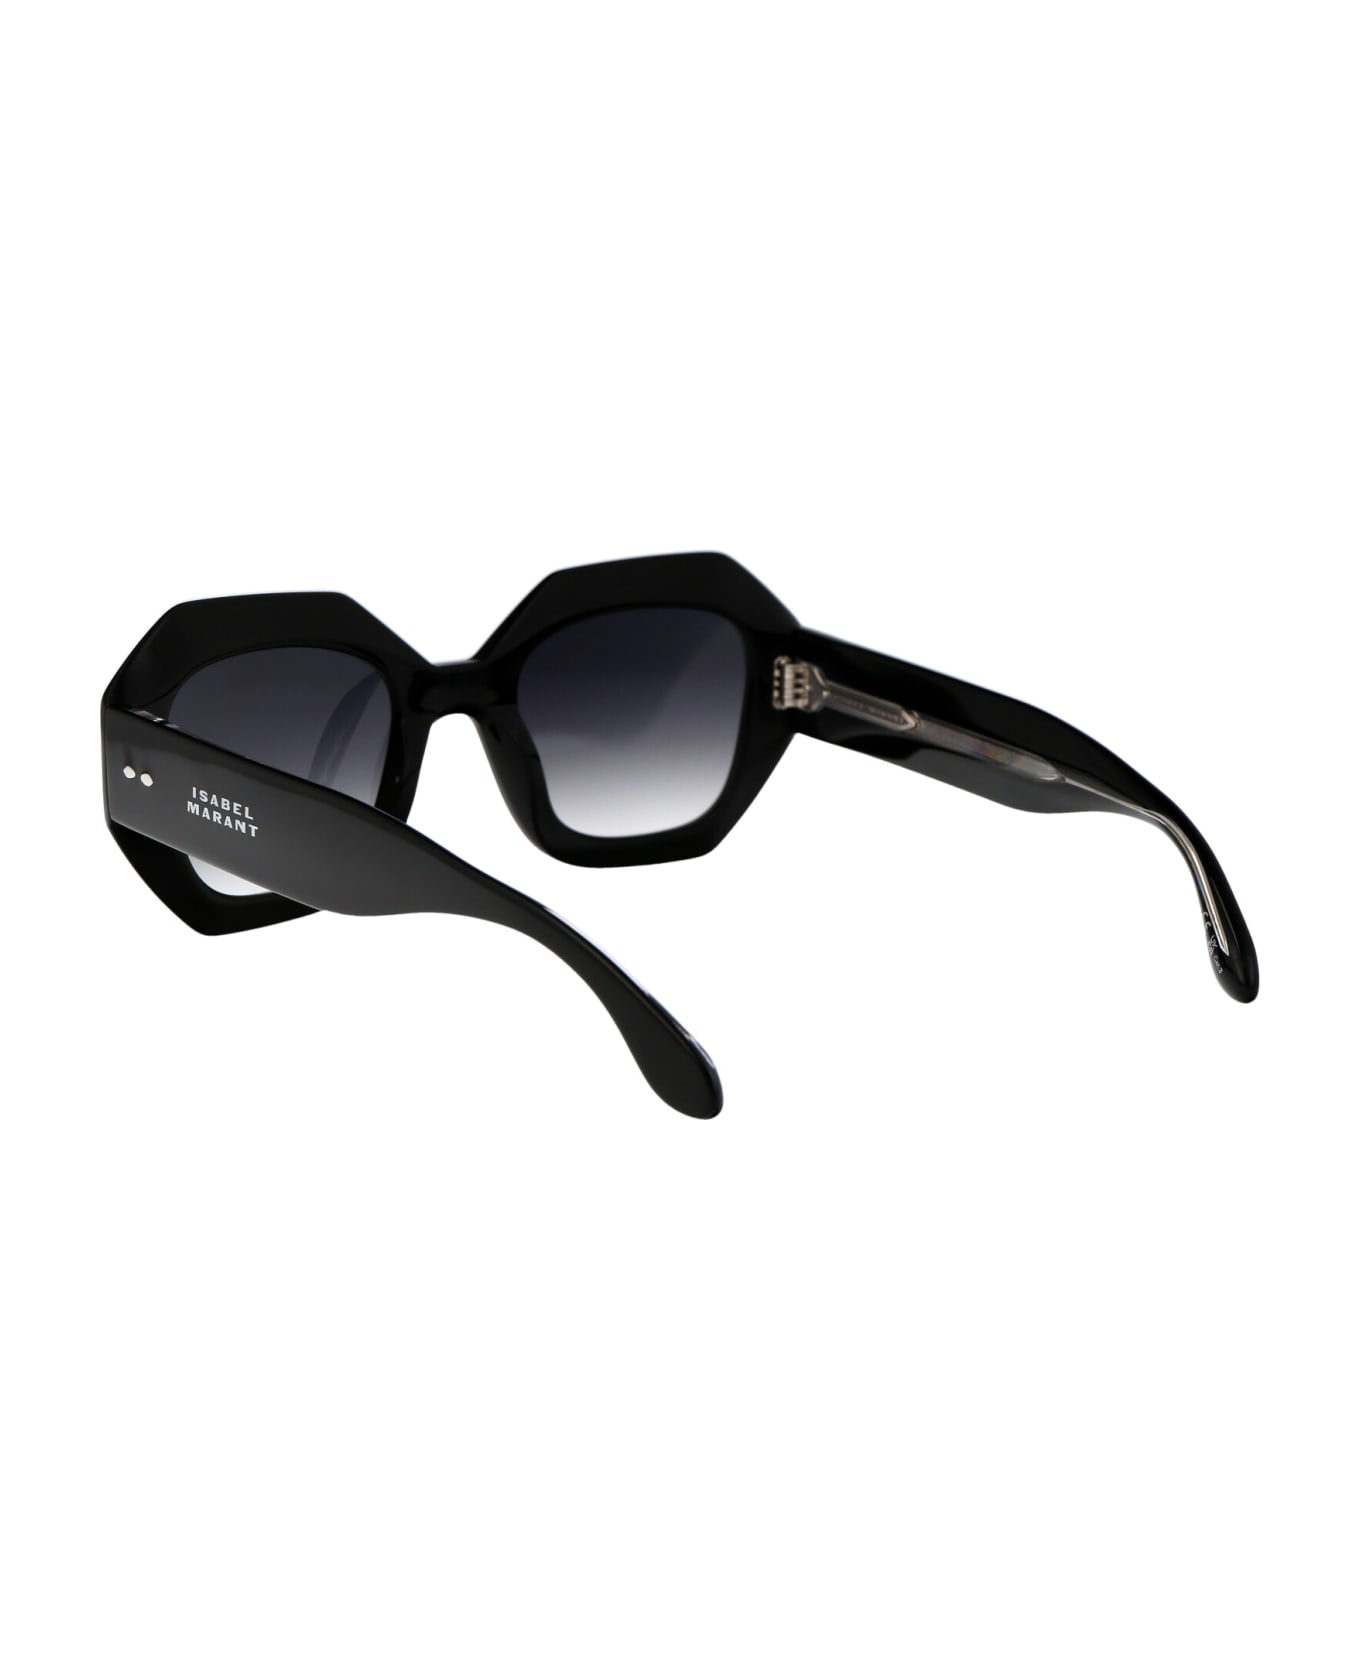 Isabel Marant Im 0173/s Sunglasses - 8079O BLACK サングラス